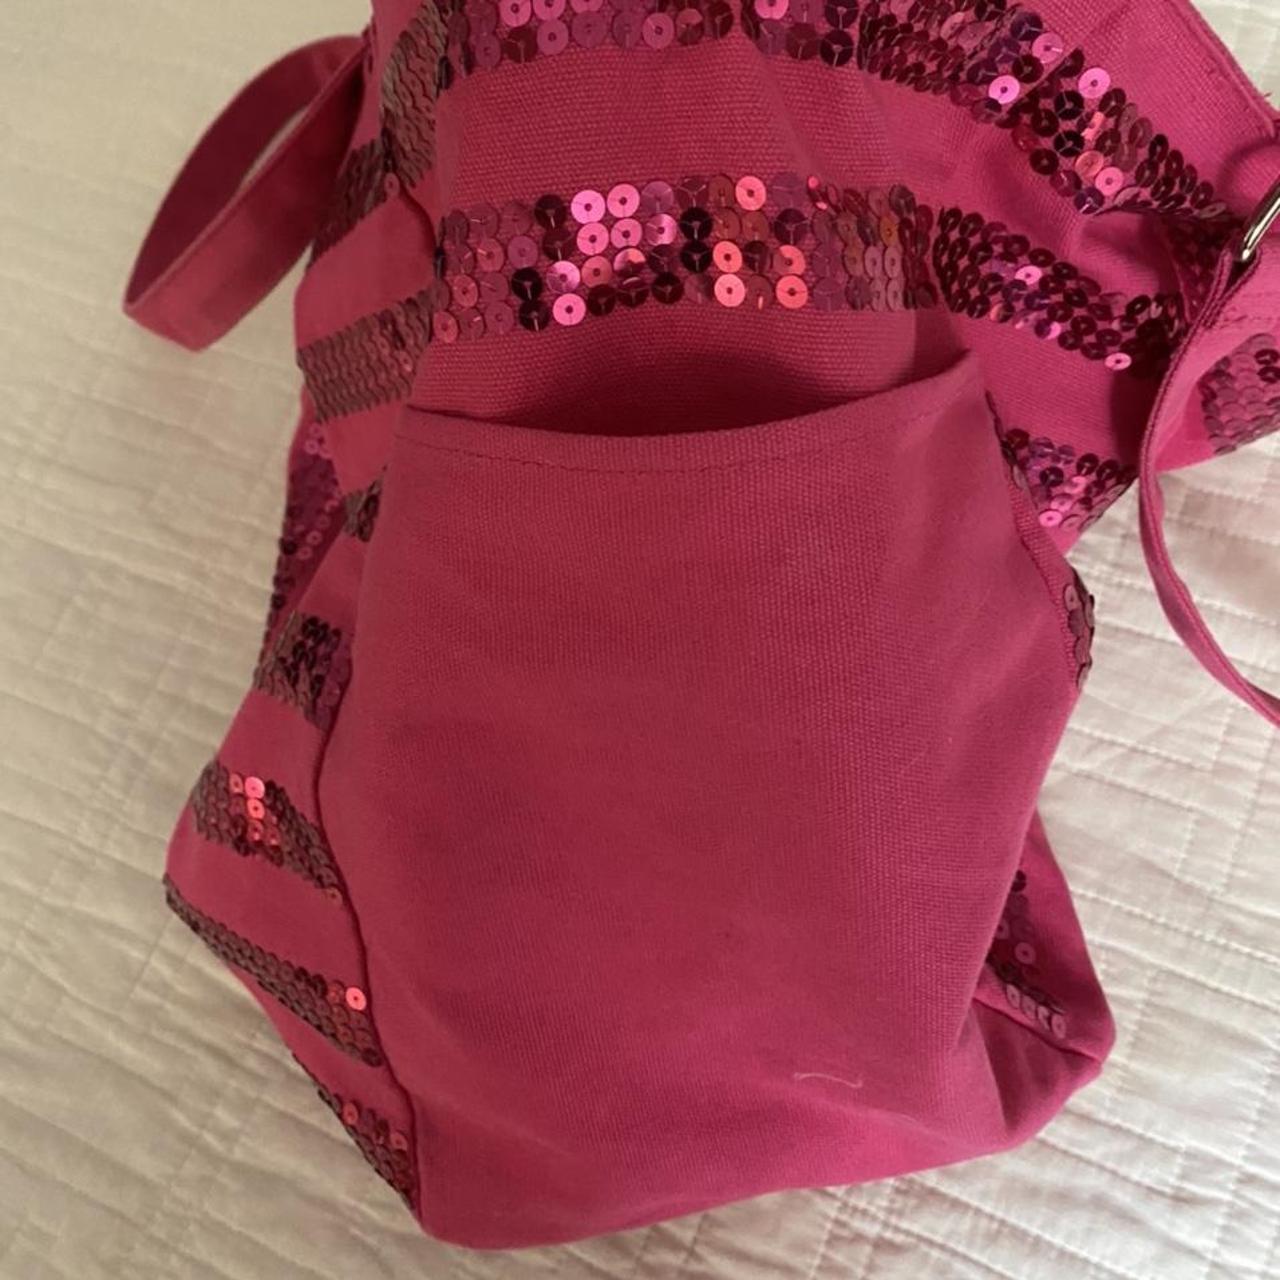 Victoria's Secret tote 💕 bright pink with sequin - Depop